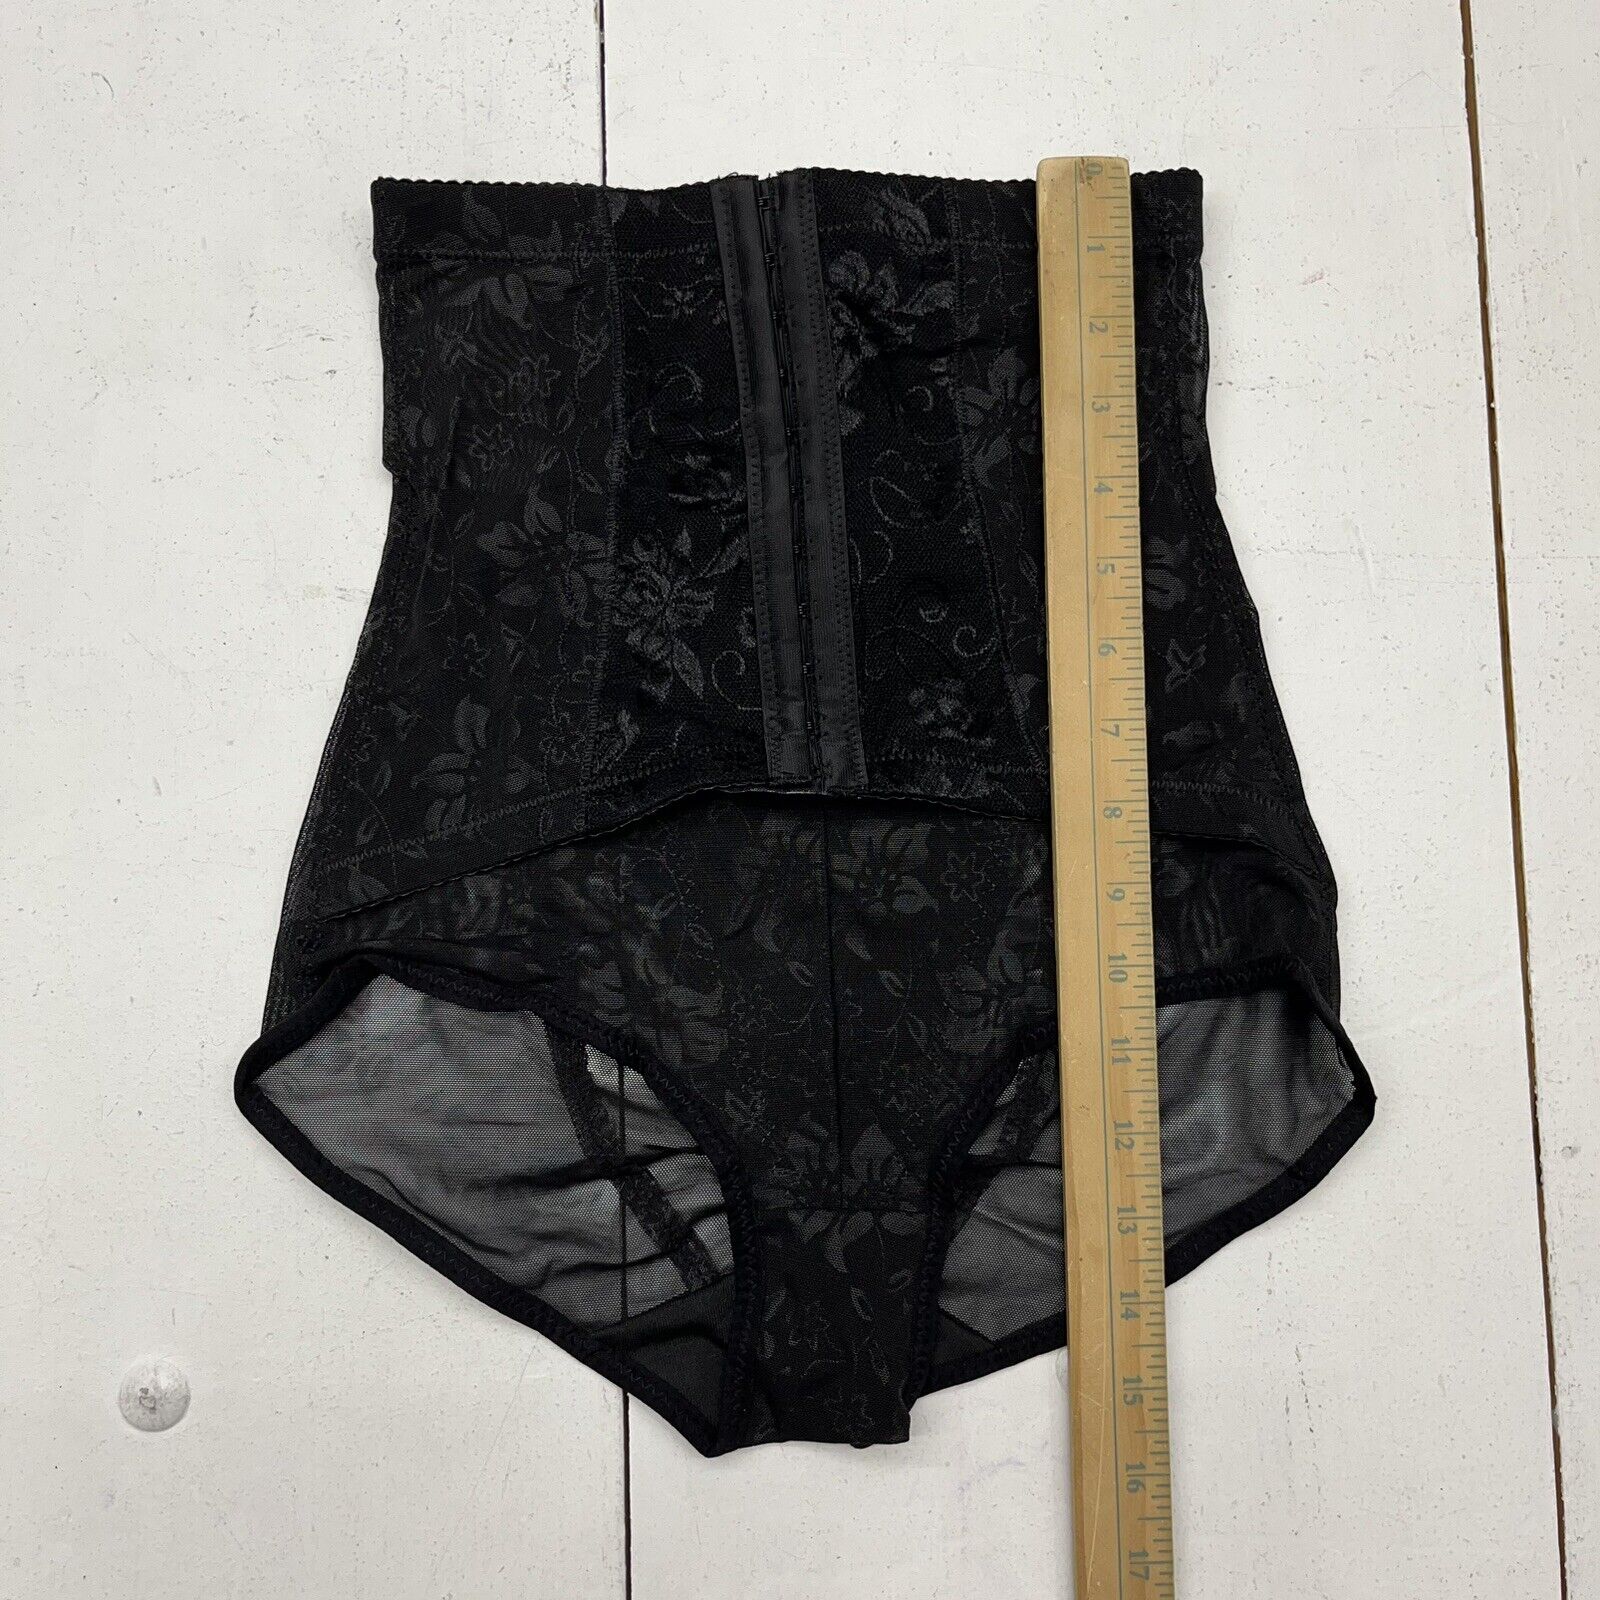 Shein Black Waist Trainer Panties Women's Size Small NEW - beyond